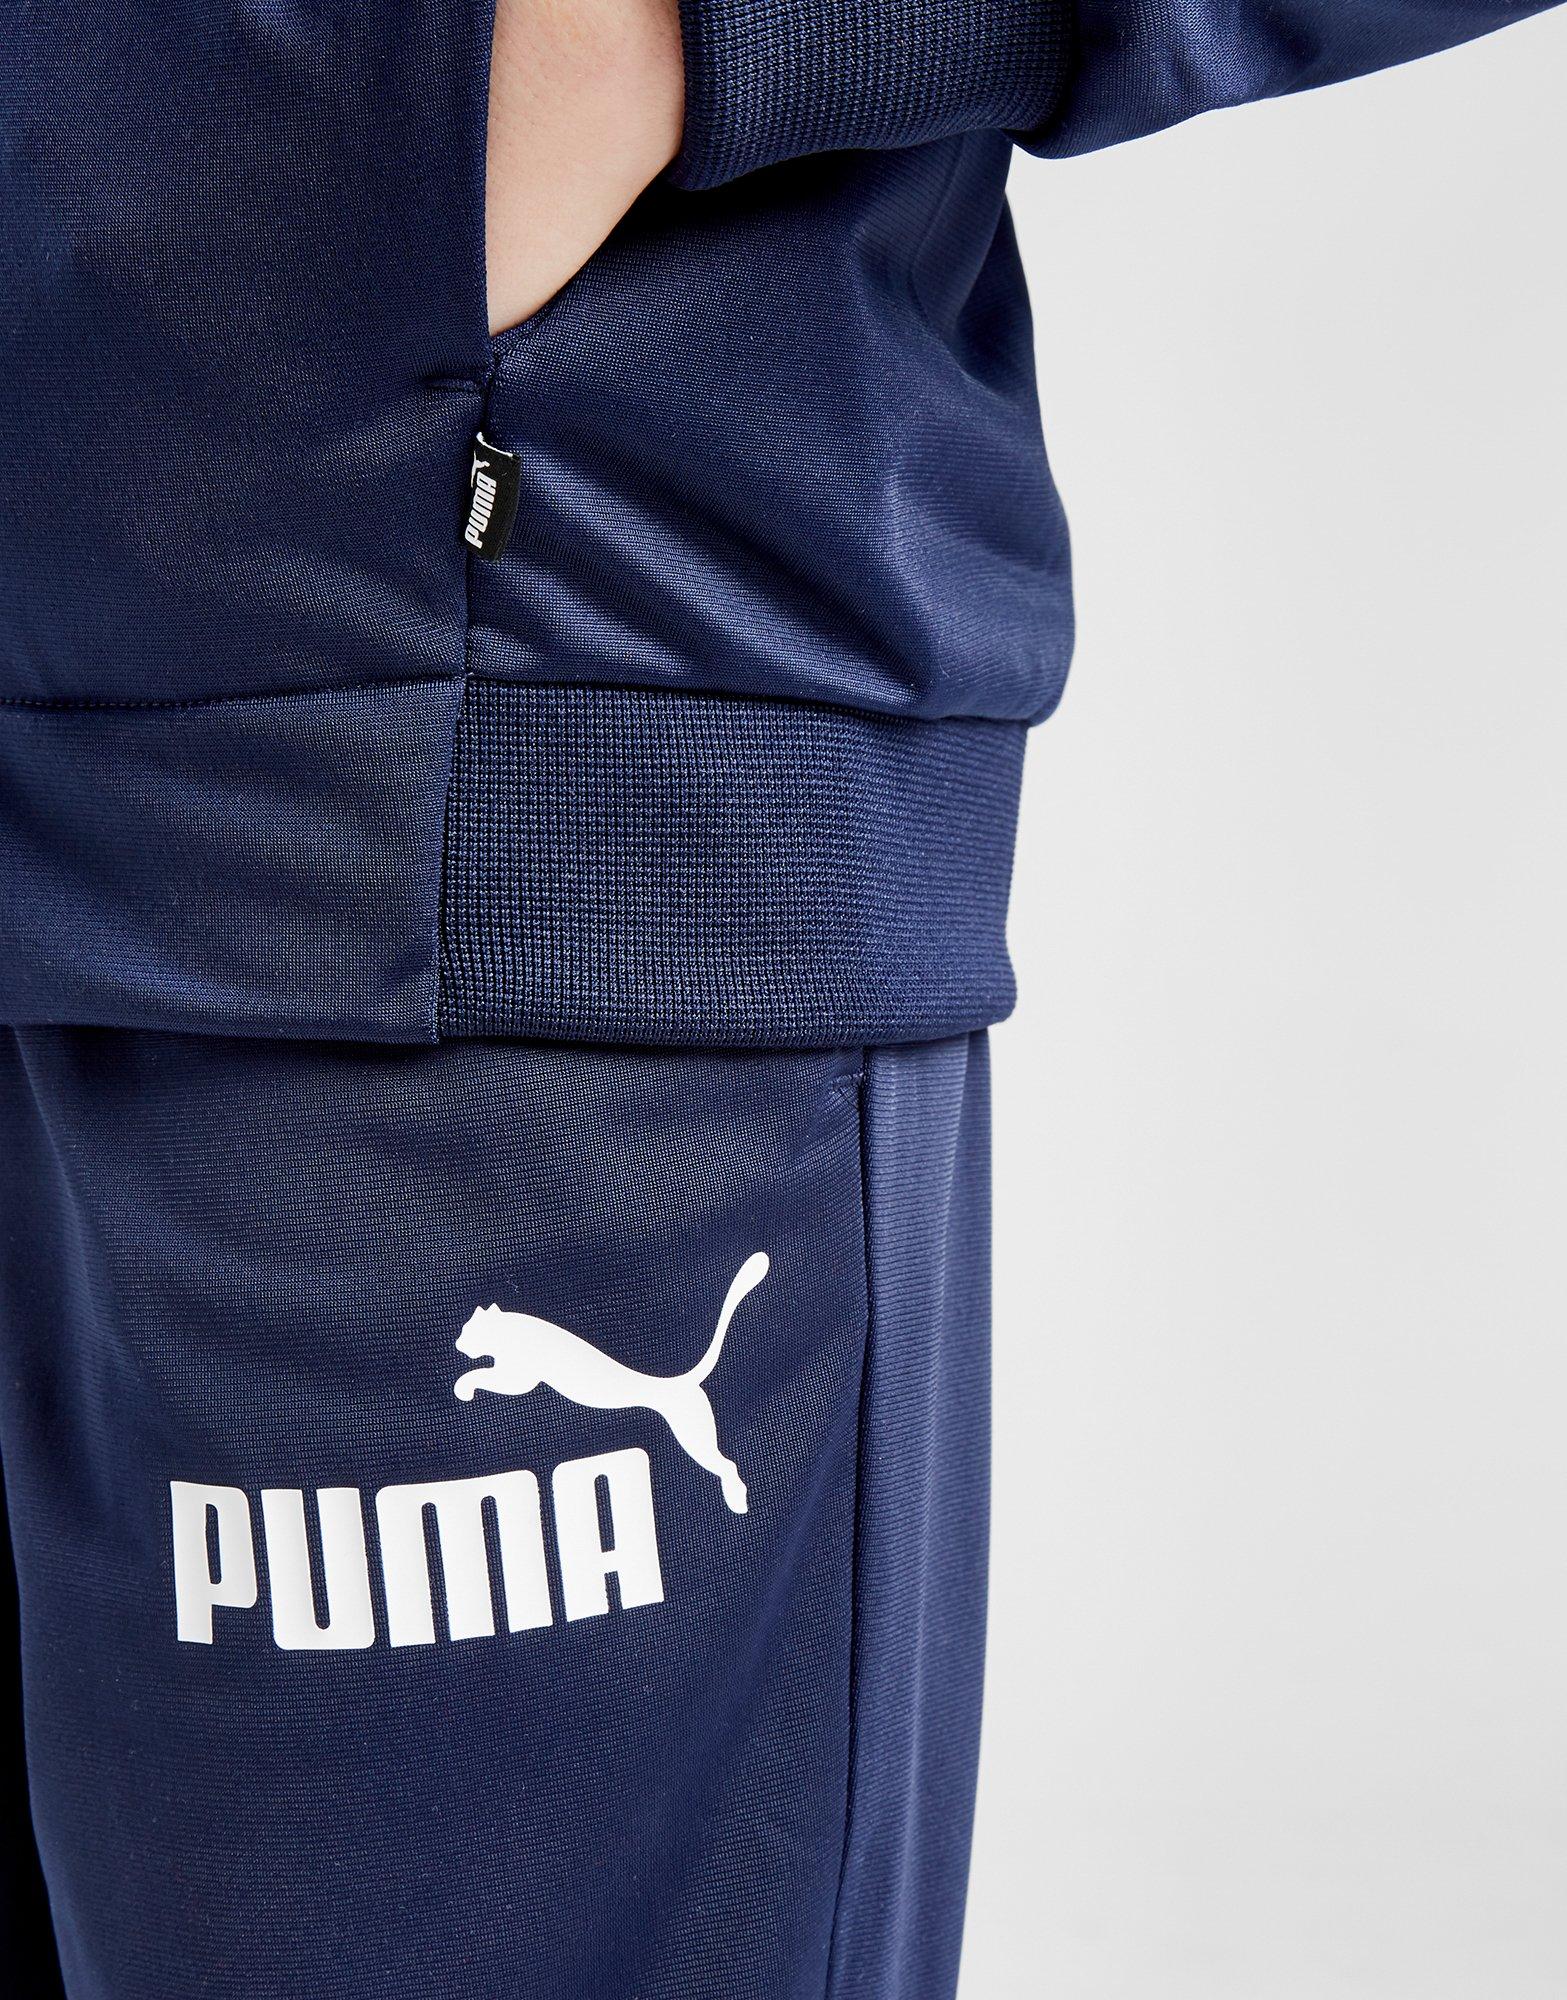 blue puma sweatsuit